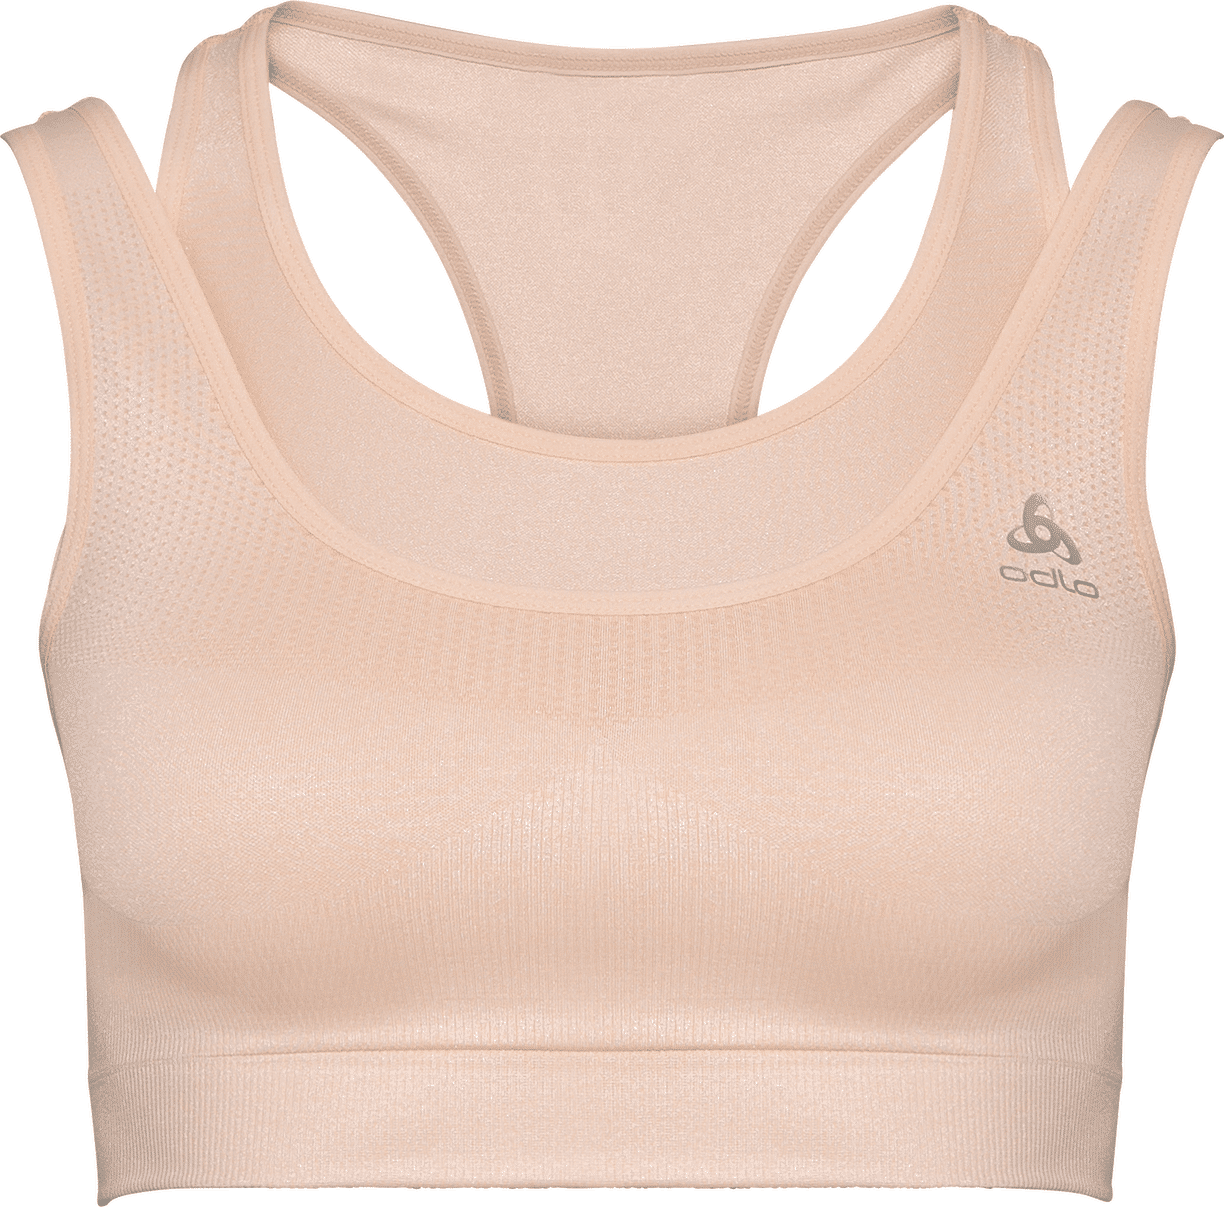 Odlo Sports Bra Ceramicool Seamless Medium - Sports bra - Women's